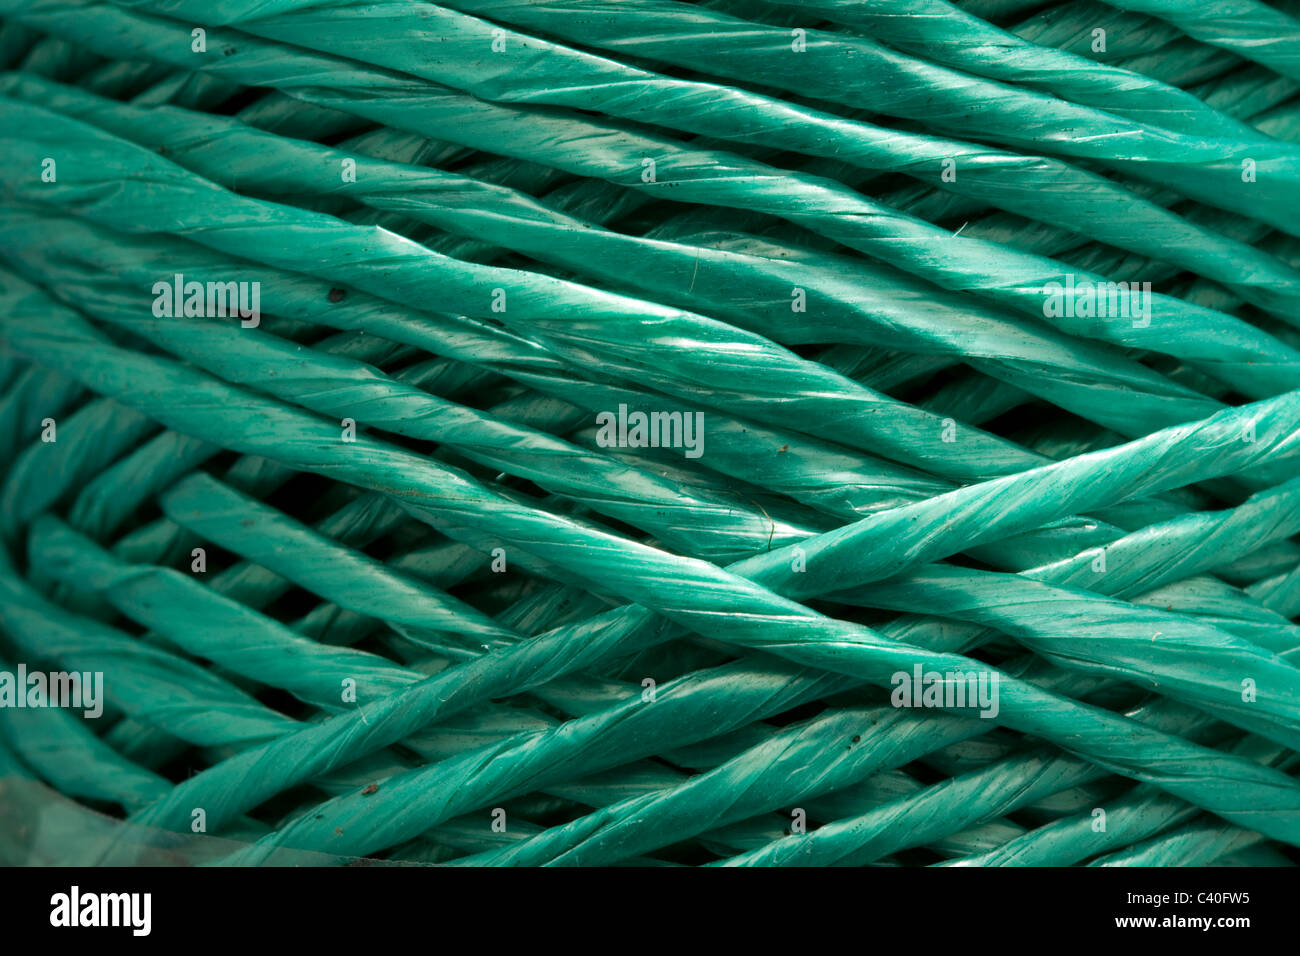 Green nylon twine string Stock Photo - Alamy